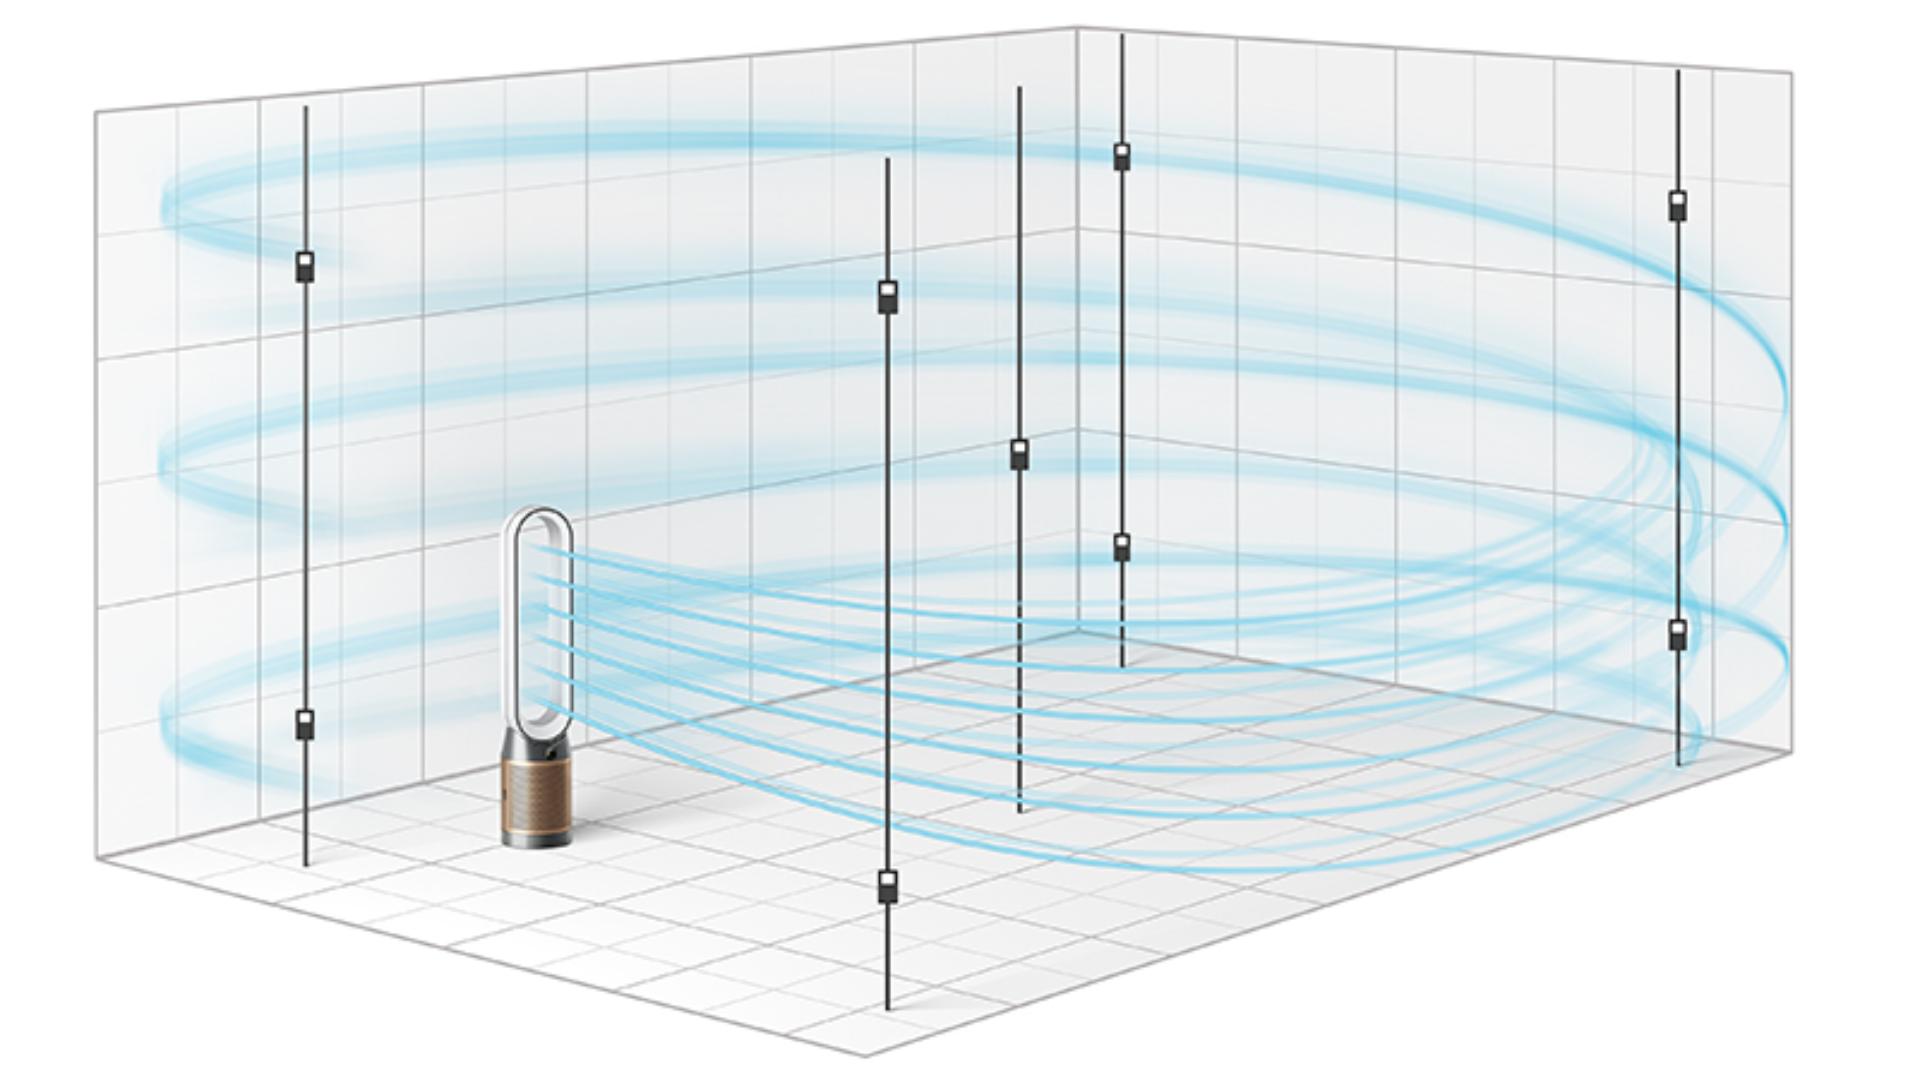 Graphic showing POLAR air circulation test method